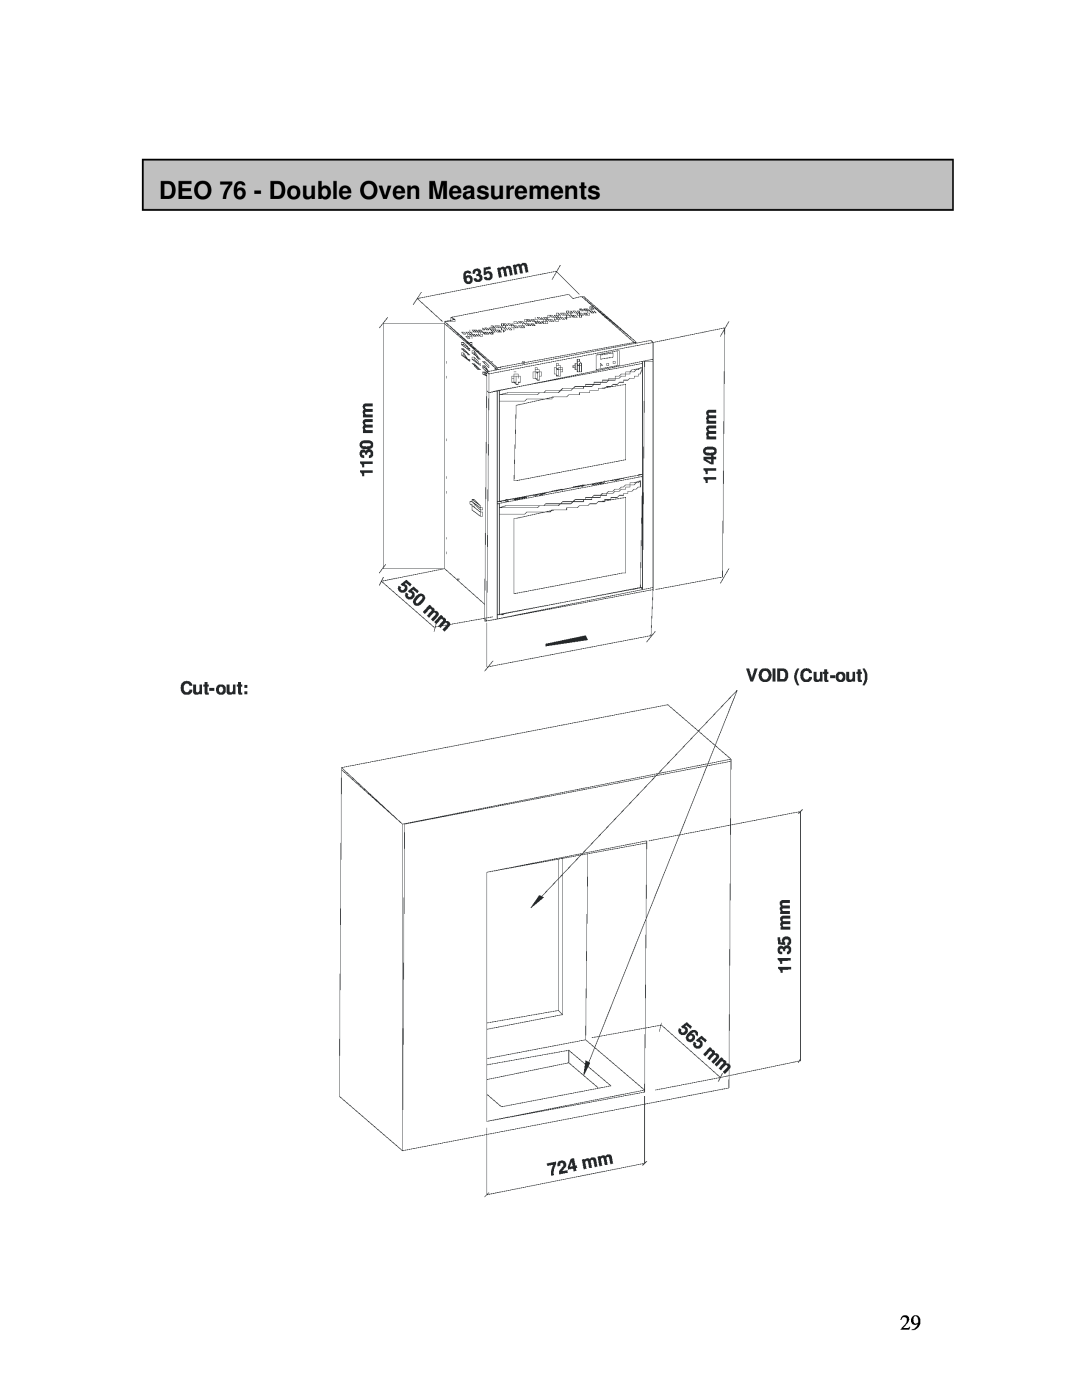 AEG B3007H-L-B DEO 76 - Double Oven Measurements, 5 5 0 m m, 5 6 5 m m, m m 5 3, 635mm 1130 mm, mm VOID Cut-out 